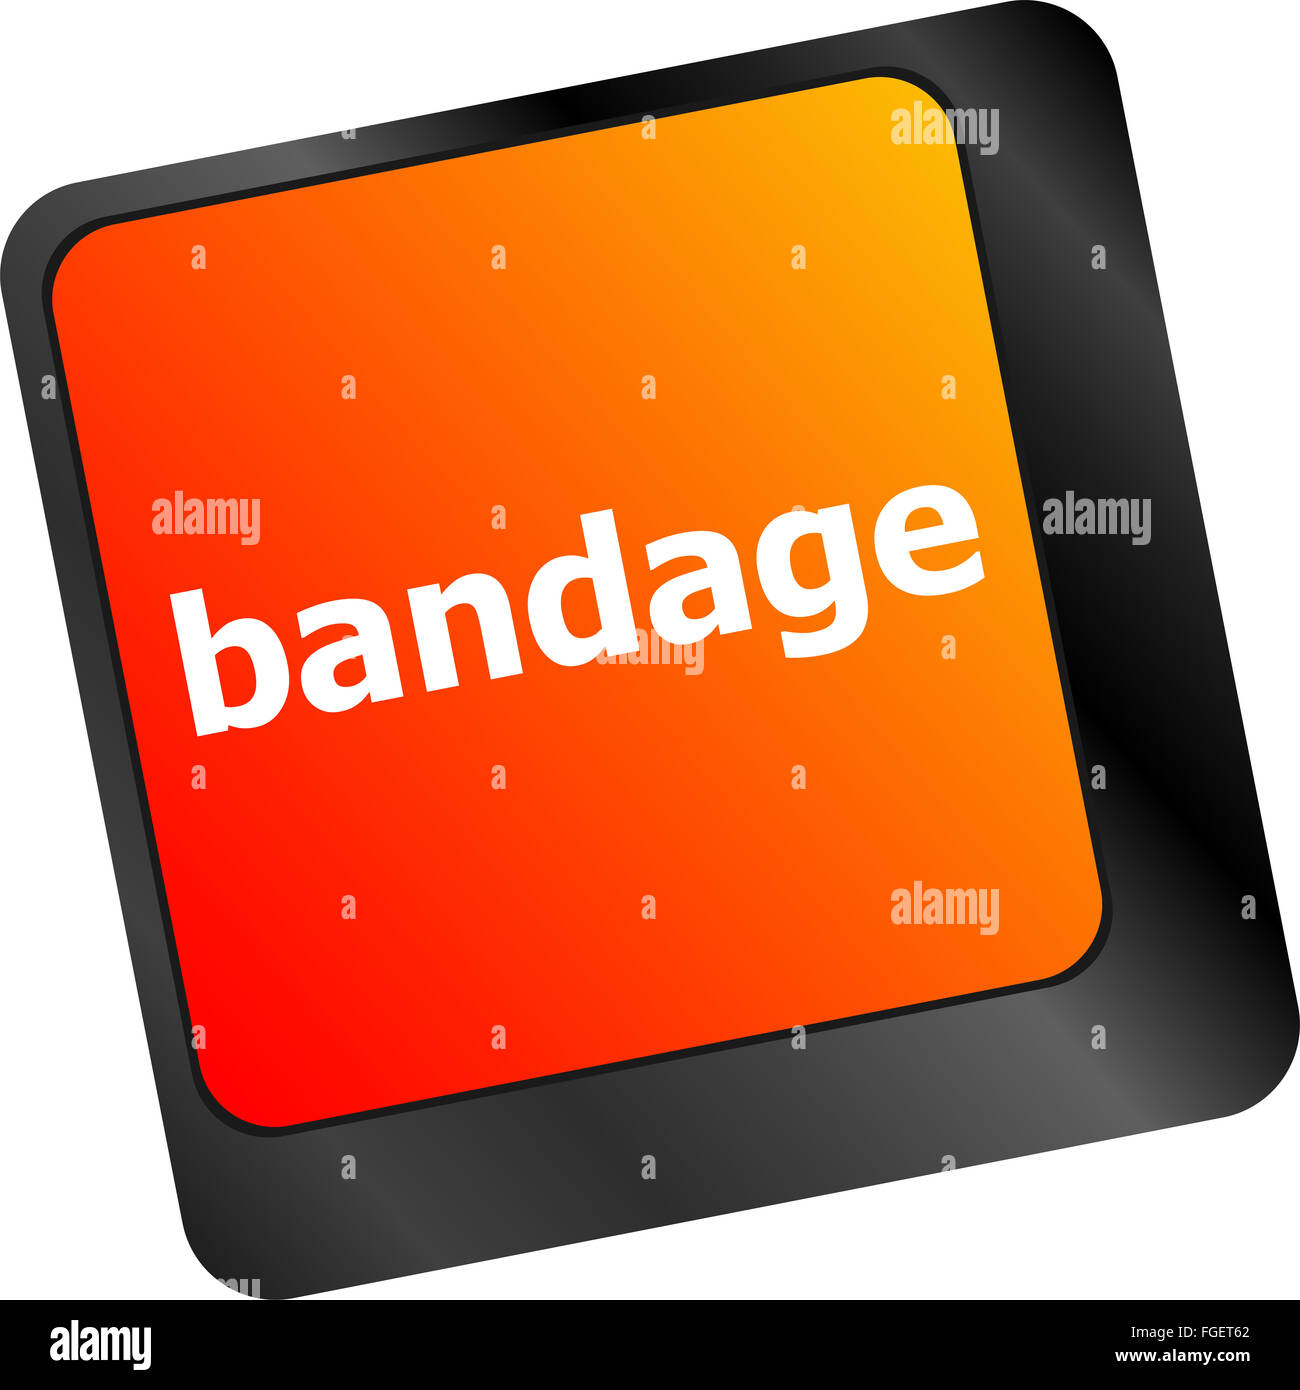 bandage word on keyboard key, notebook computer Stock Photo